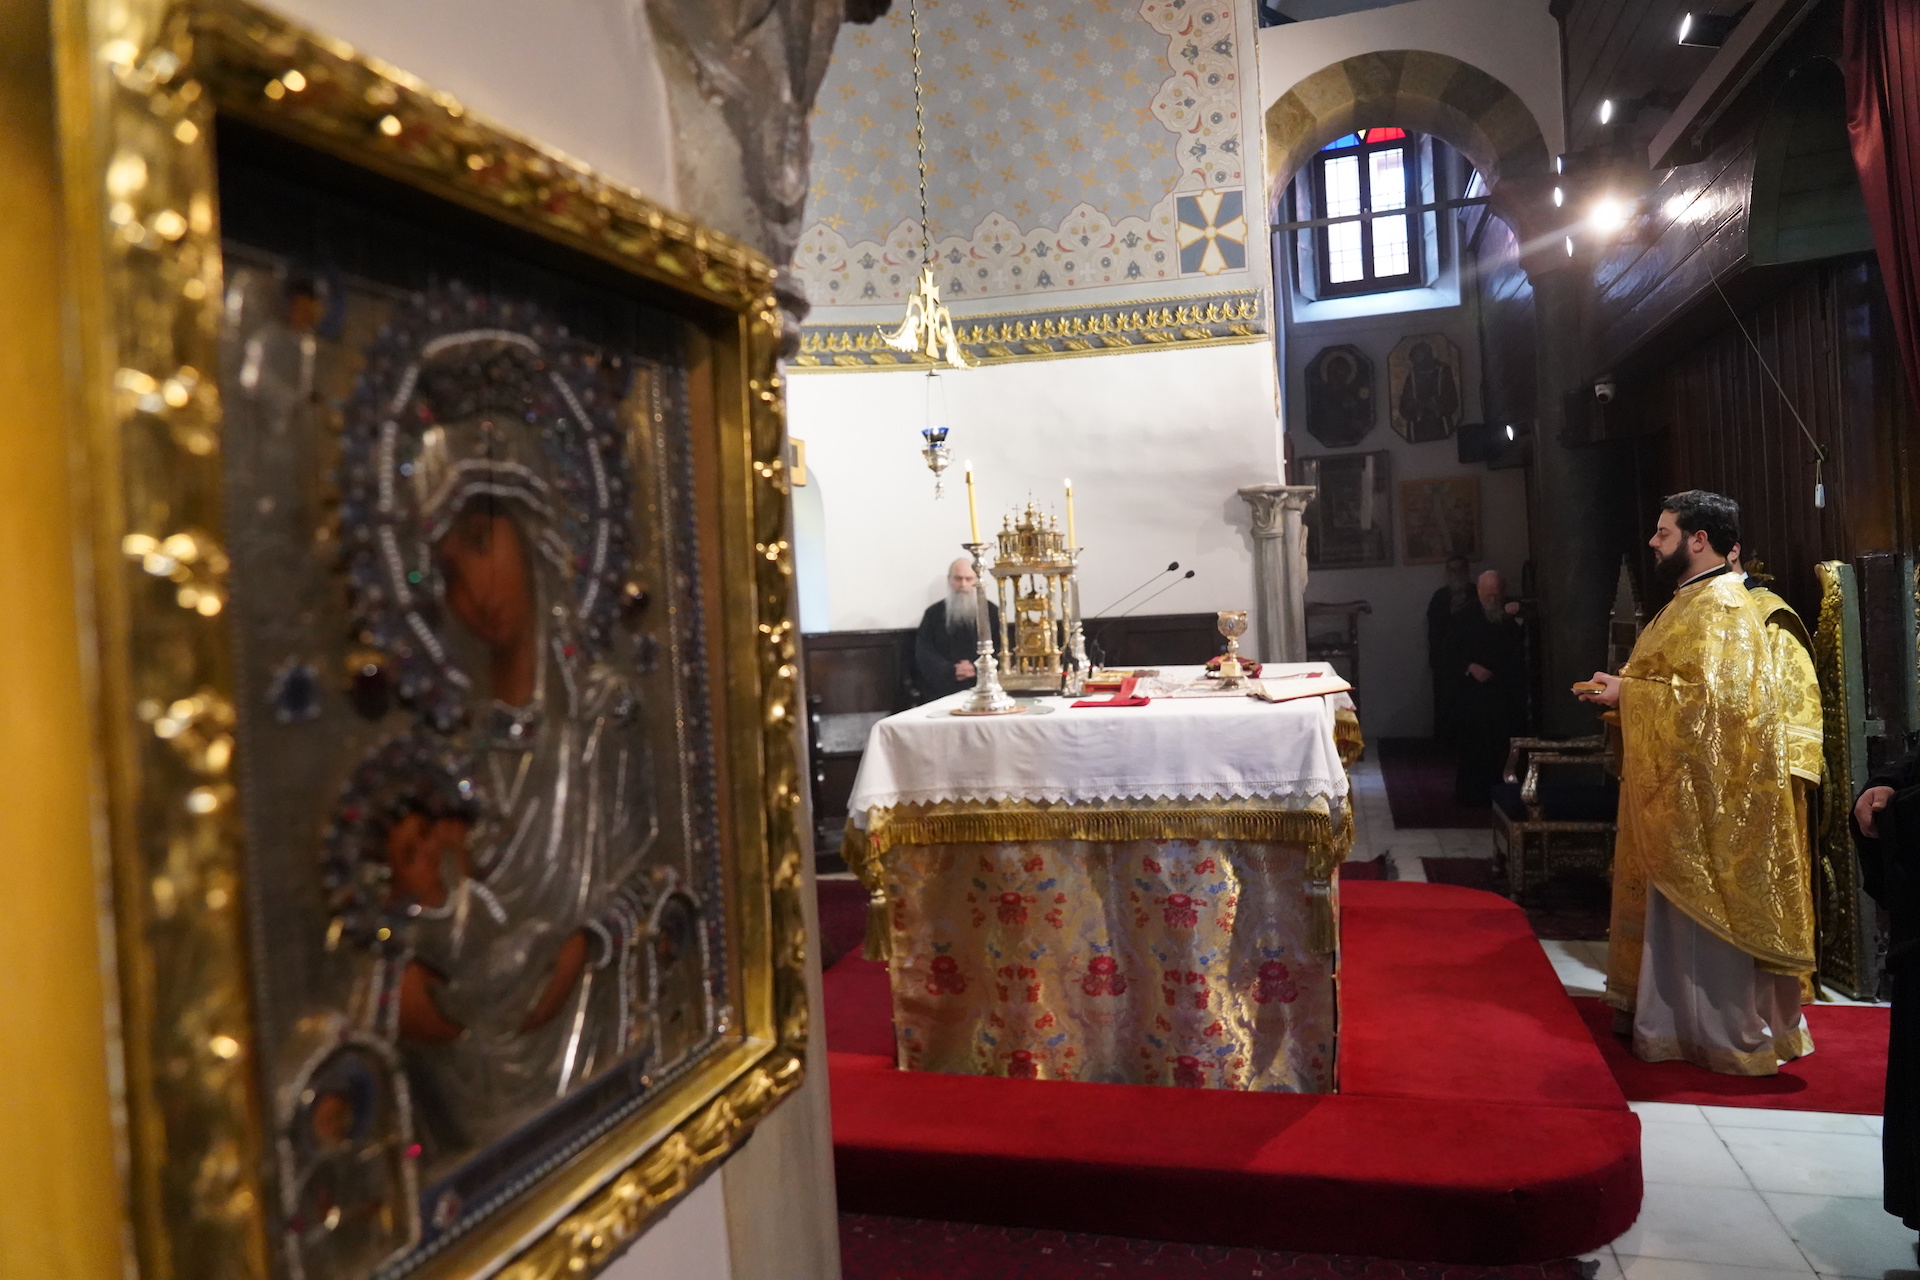 Metropolitan Chrysostomos of Nikopolis and Preveza officiates at the sacred Patriarchal Church